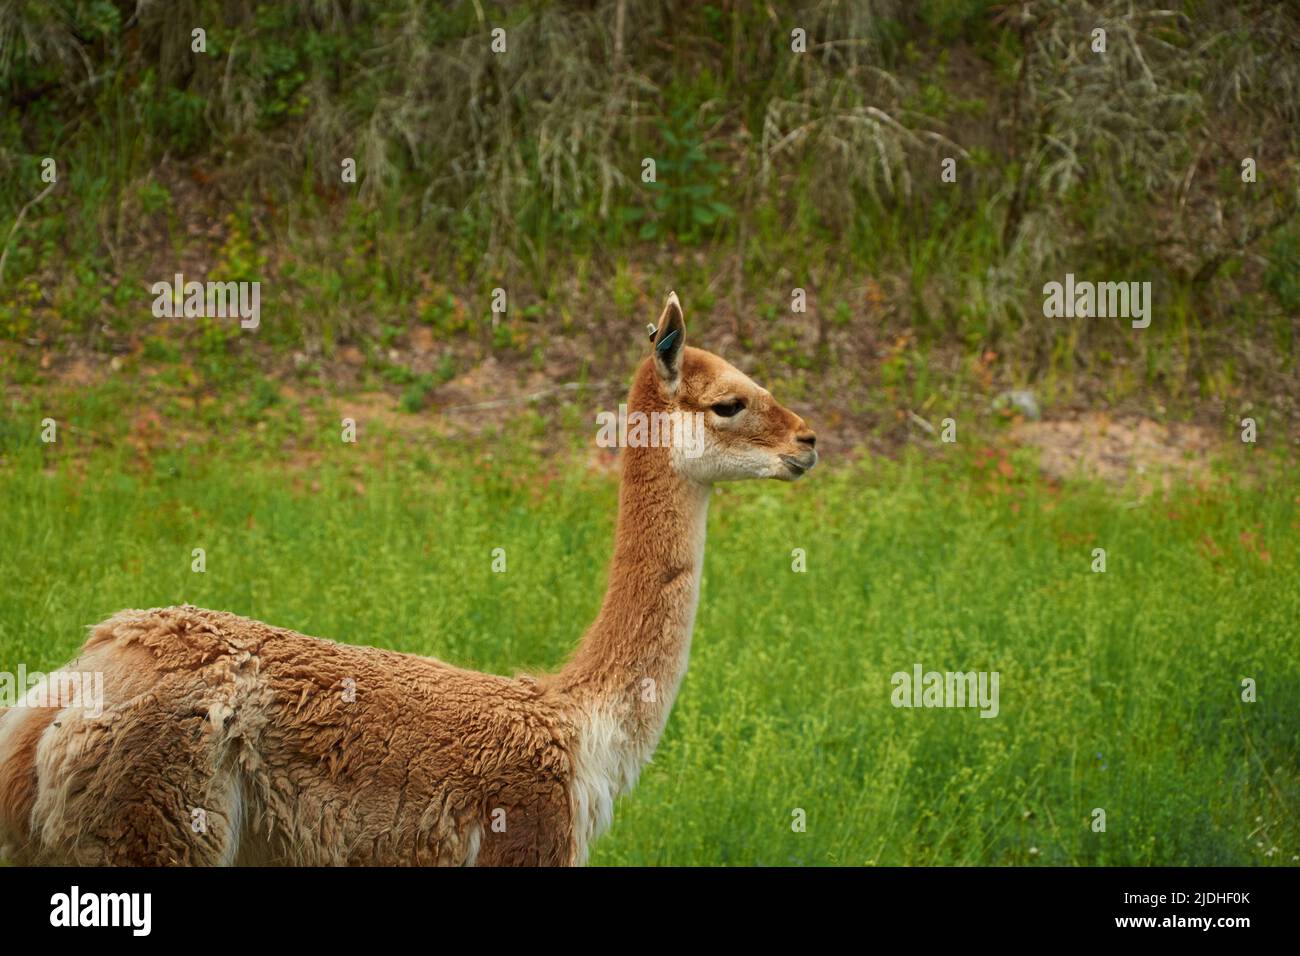 Lama vicugna is grazing in a pasture. Close-up portrait Stock Photo